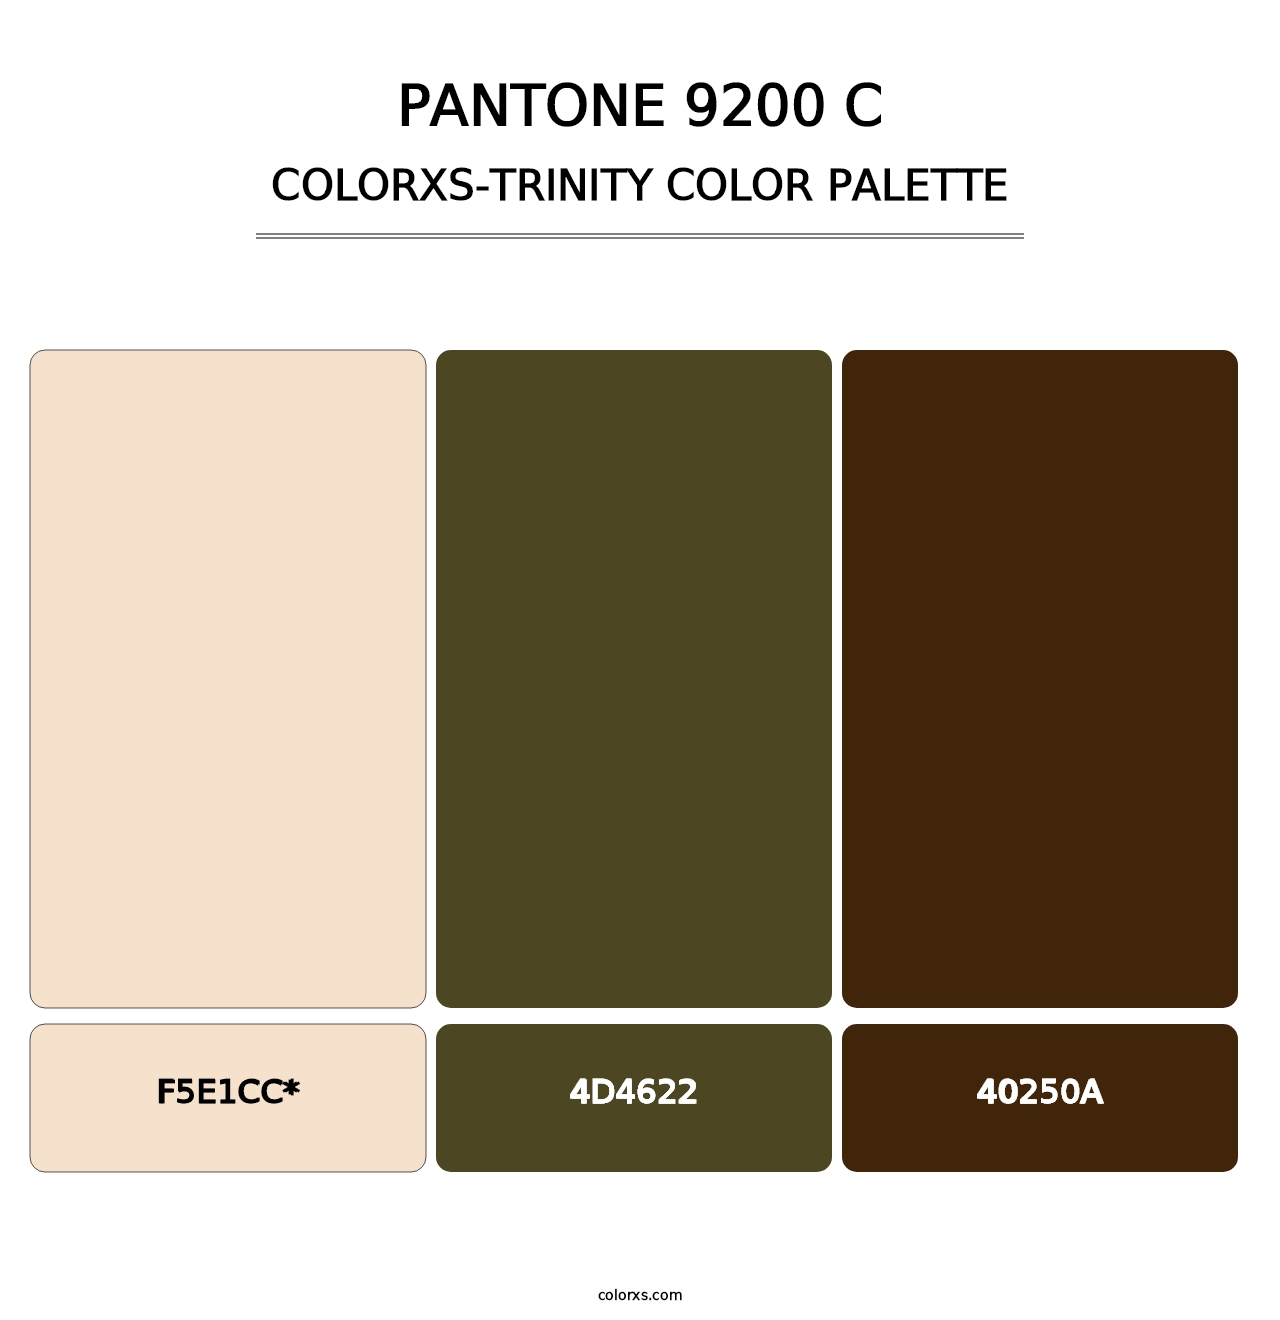 PANTONE 9200 C - Colorxs Trinity Palette